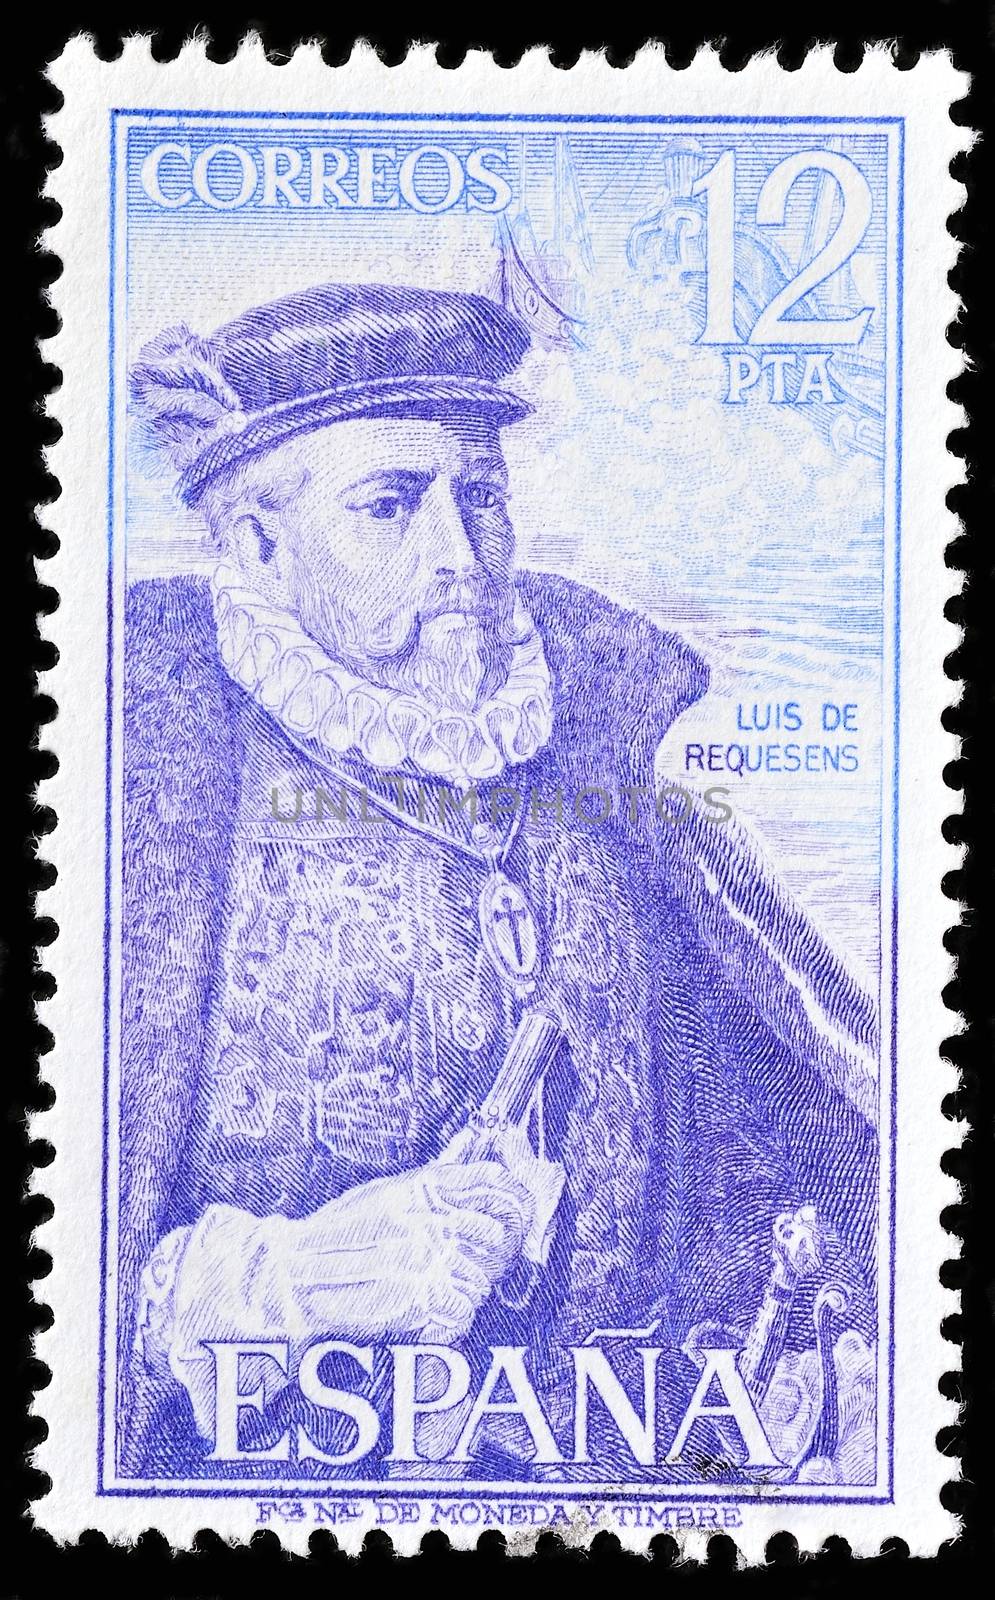 SPAIN - CIRCA 1976: stamp printed by Spain, shows Luis de Requesens, circa 1976